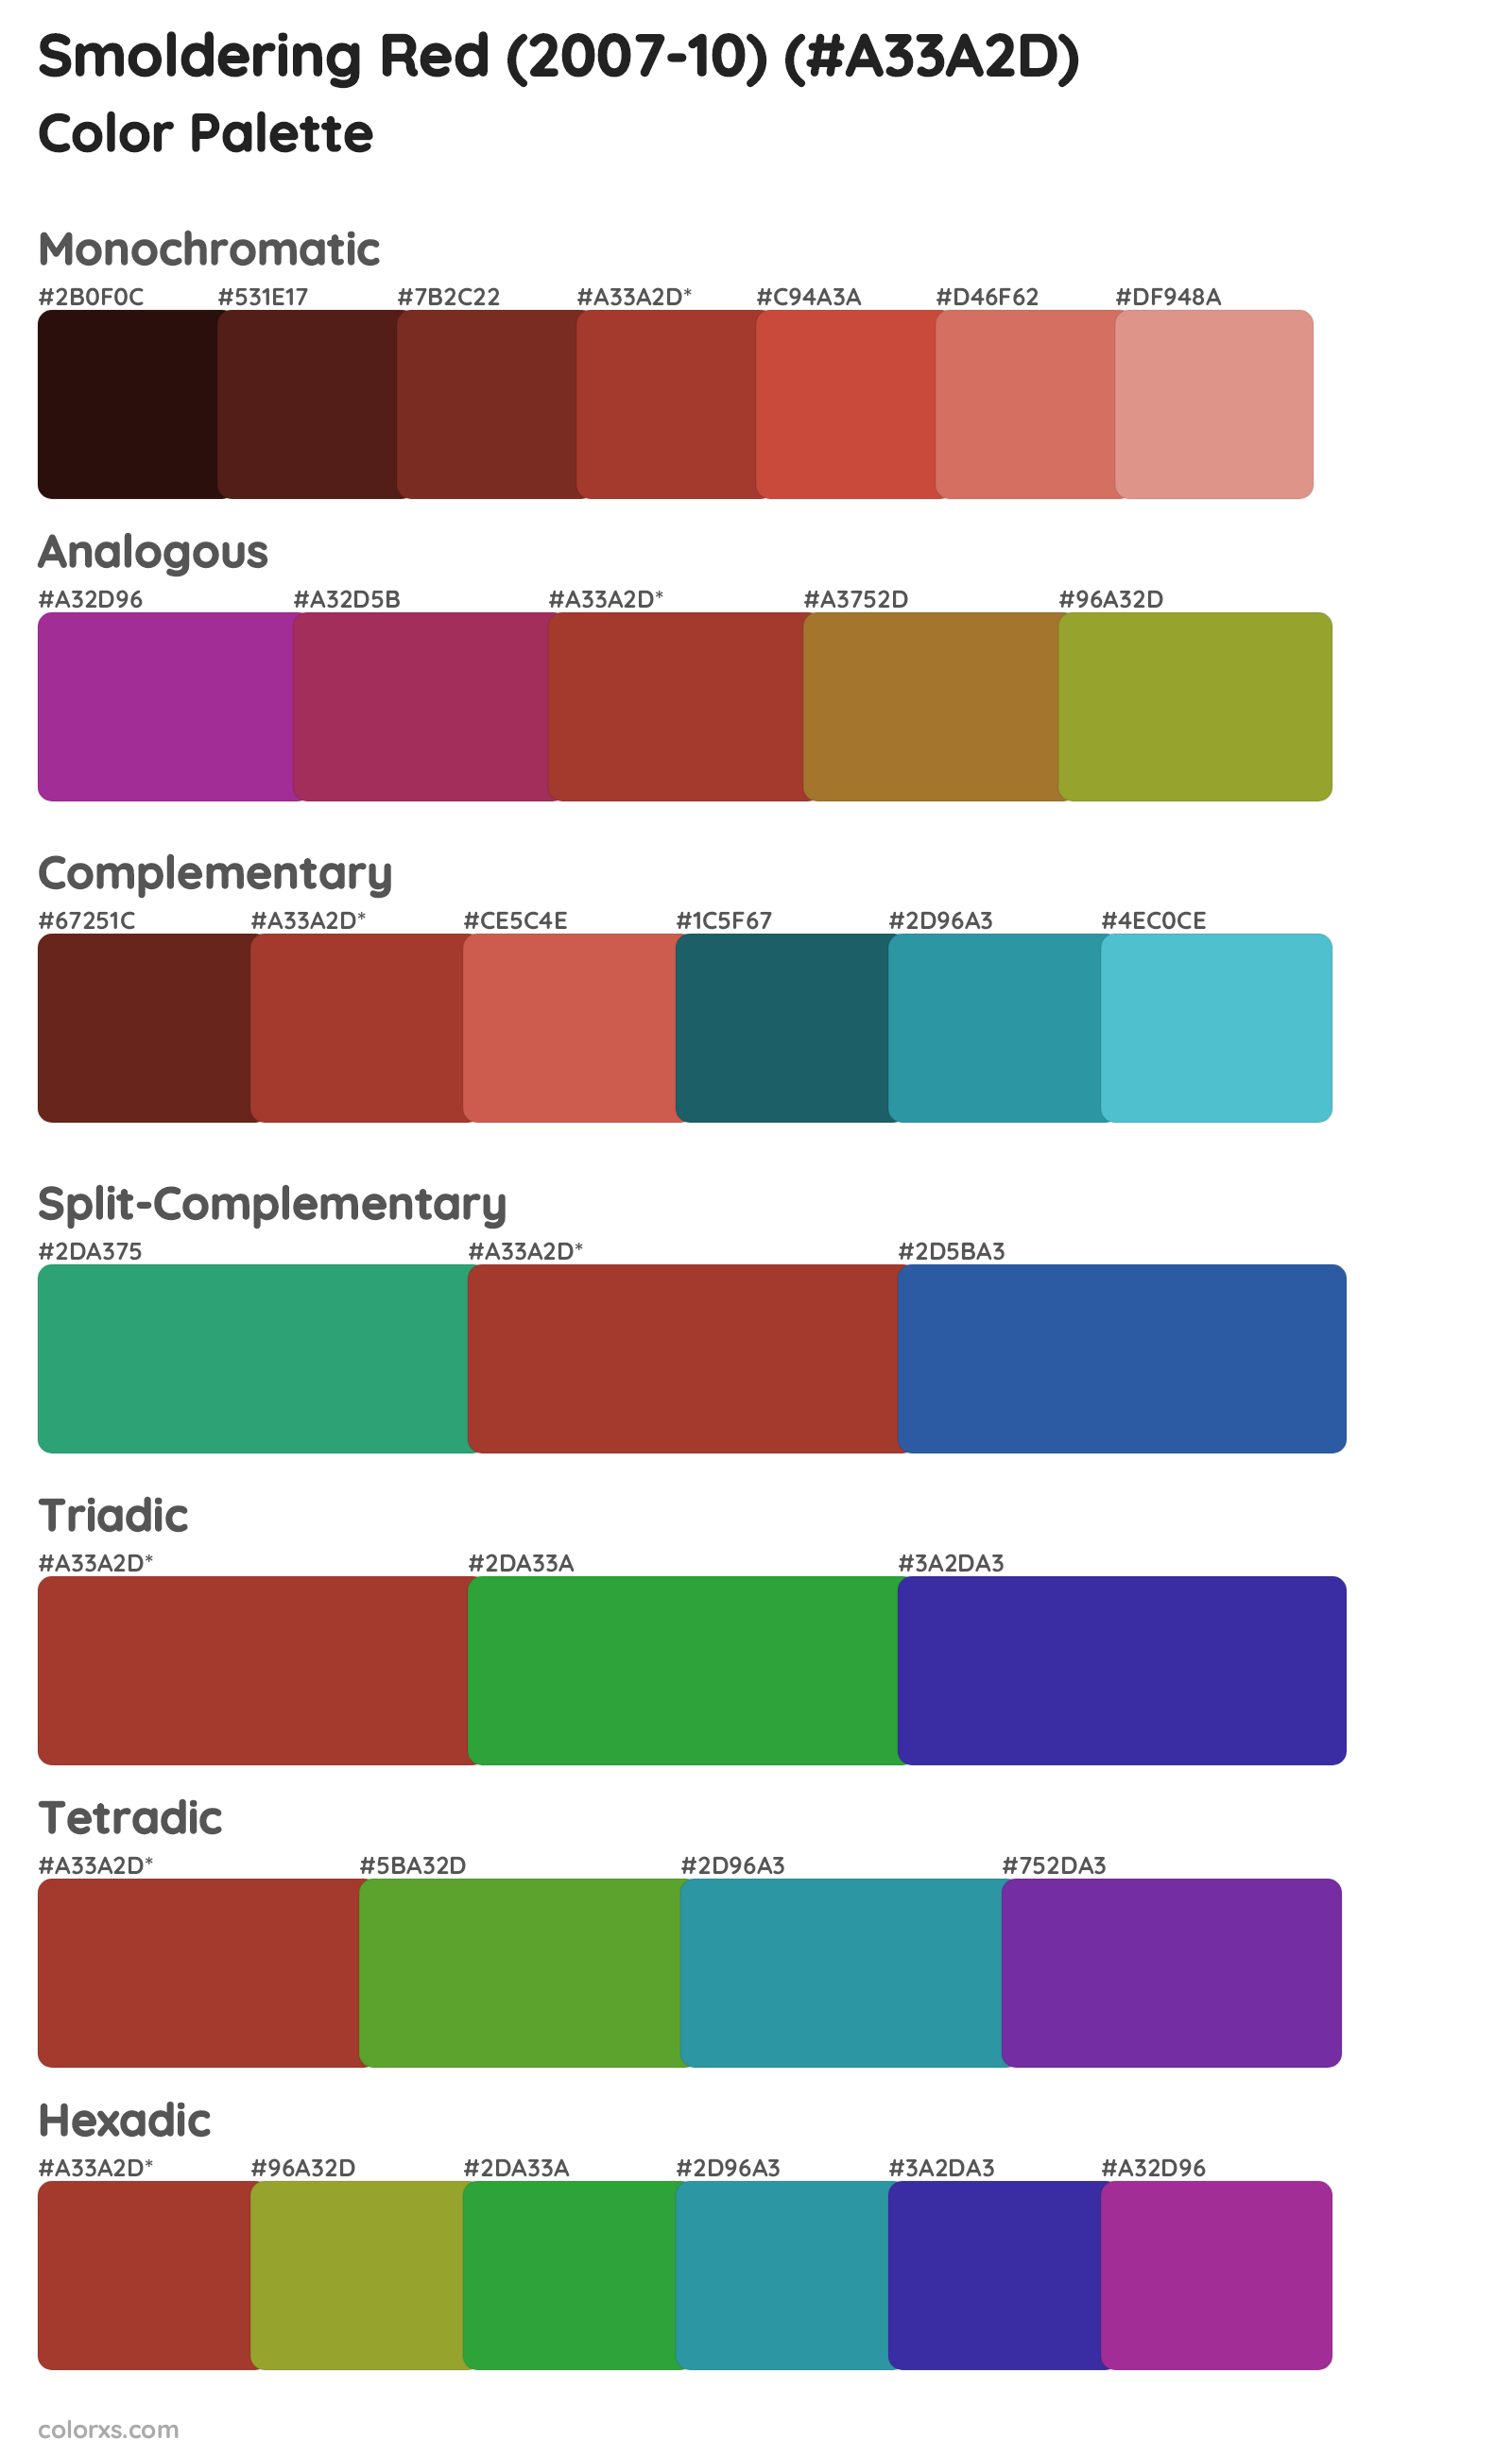 Smoldering Red (2007-10) Color Scheme Palettes